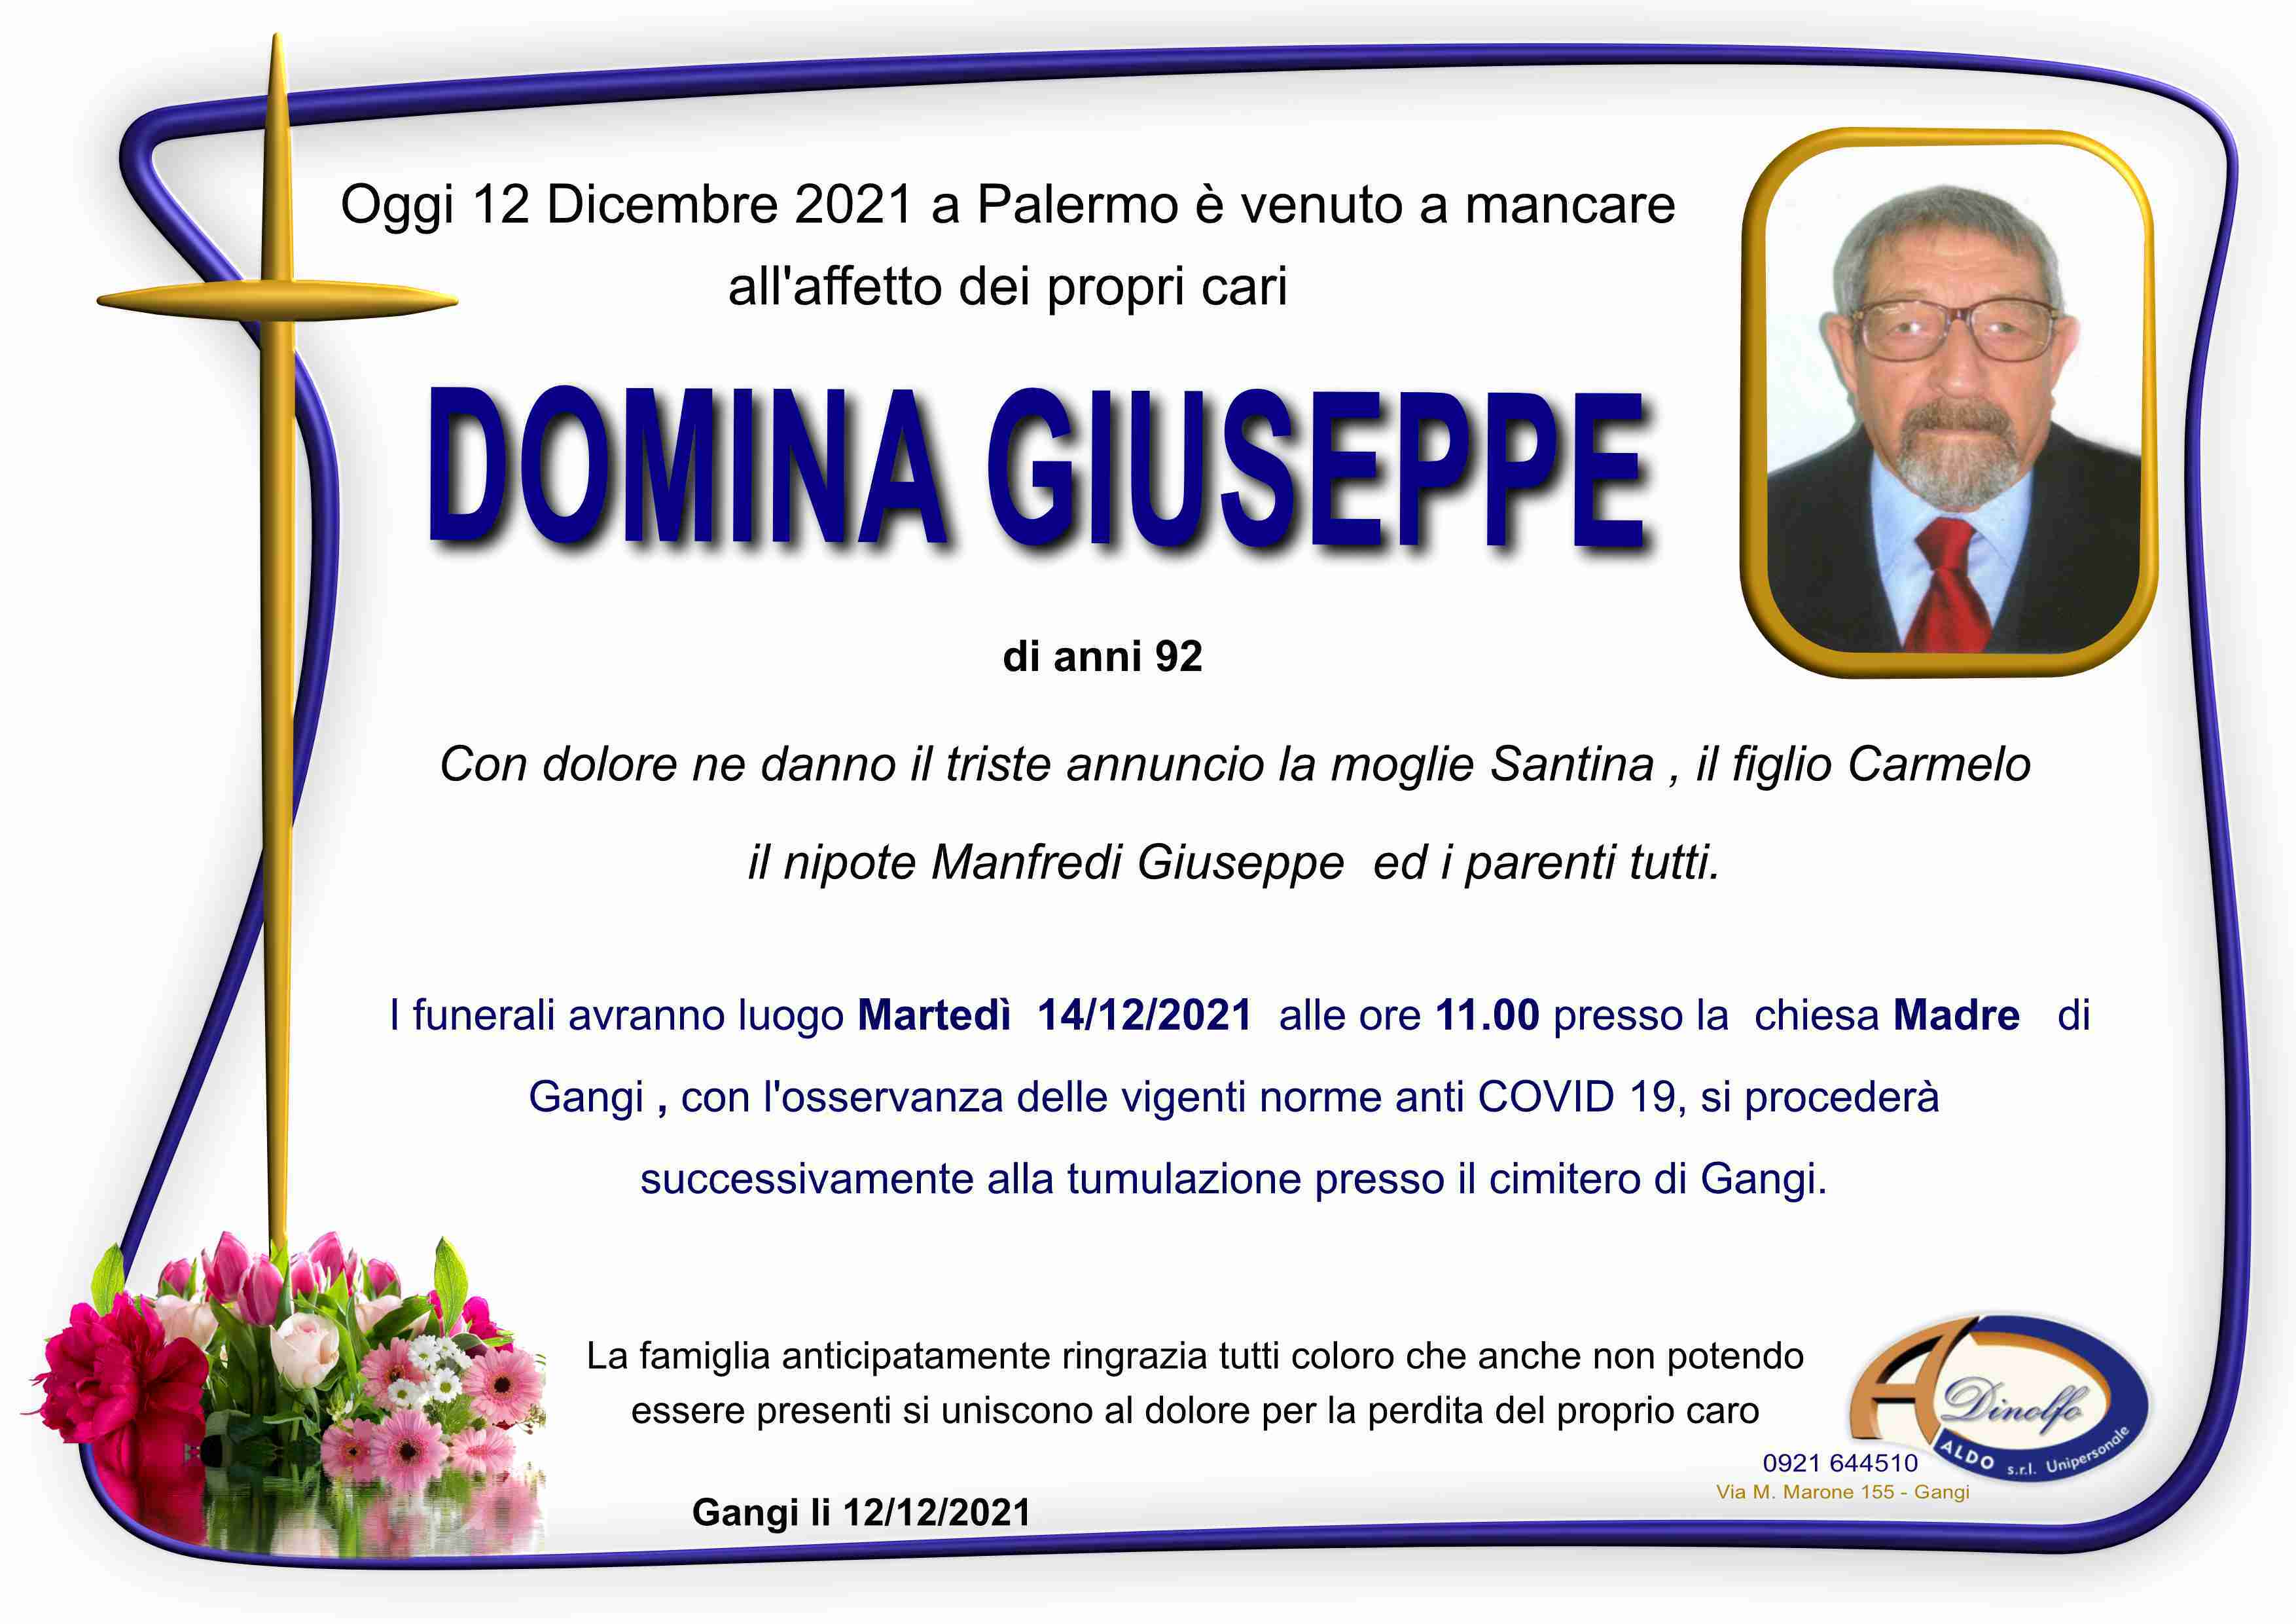 Giuseppe Domina